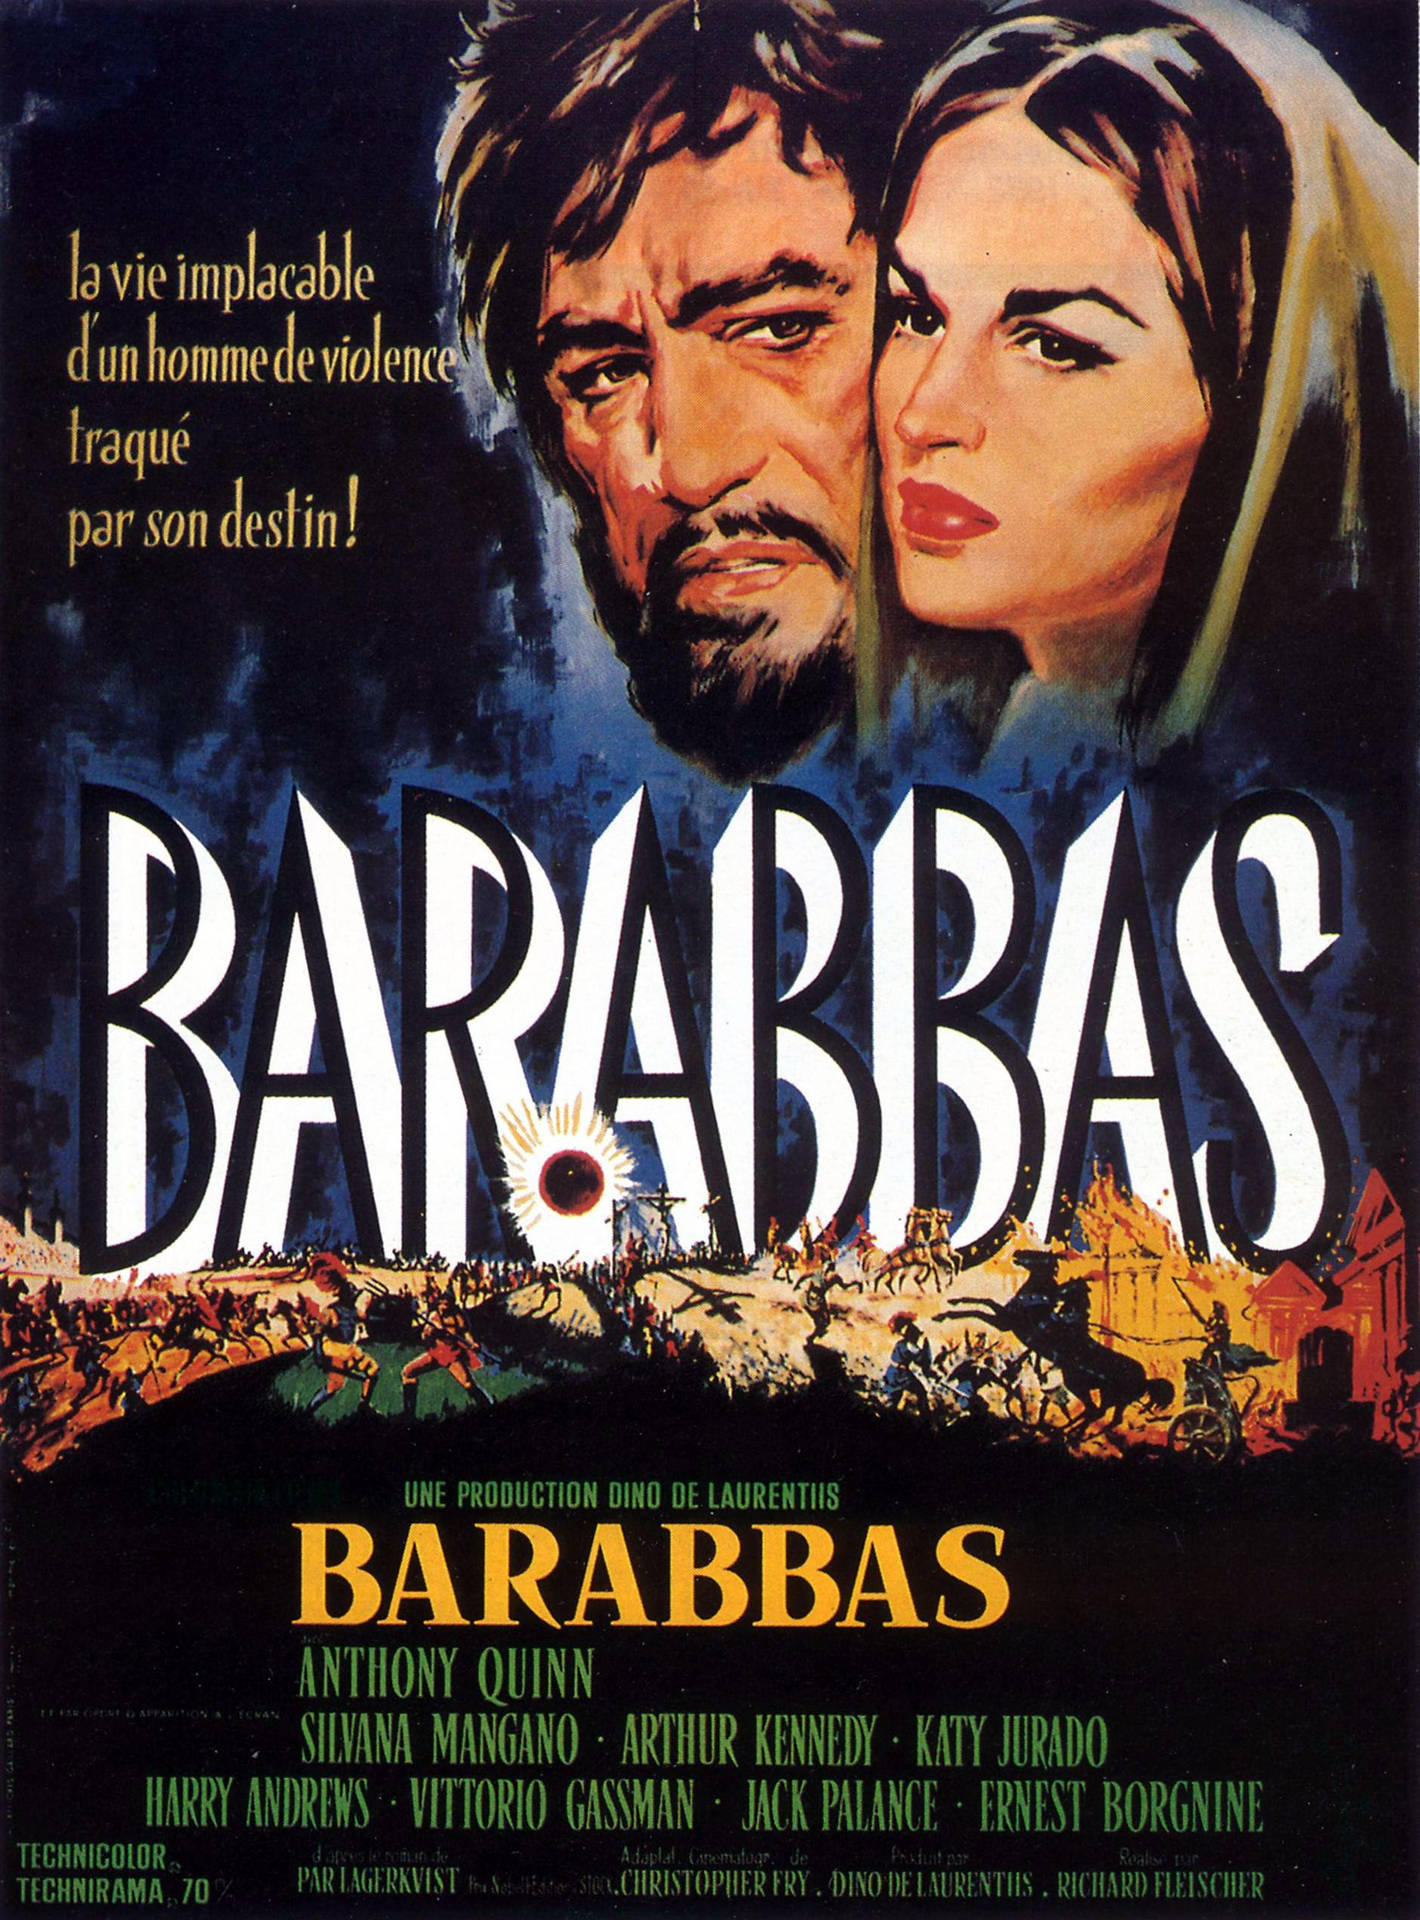 Anthony Quinn Barabbas The Movie Wallpaper